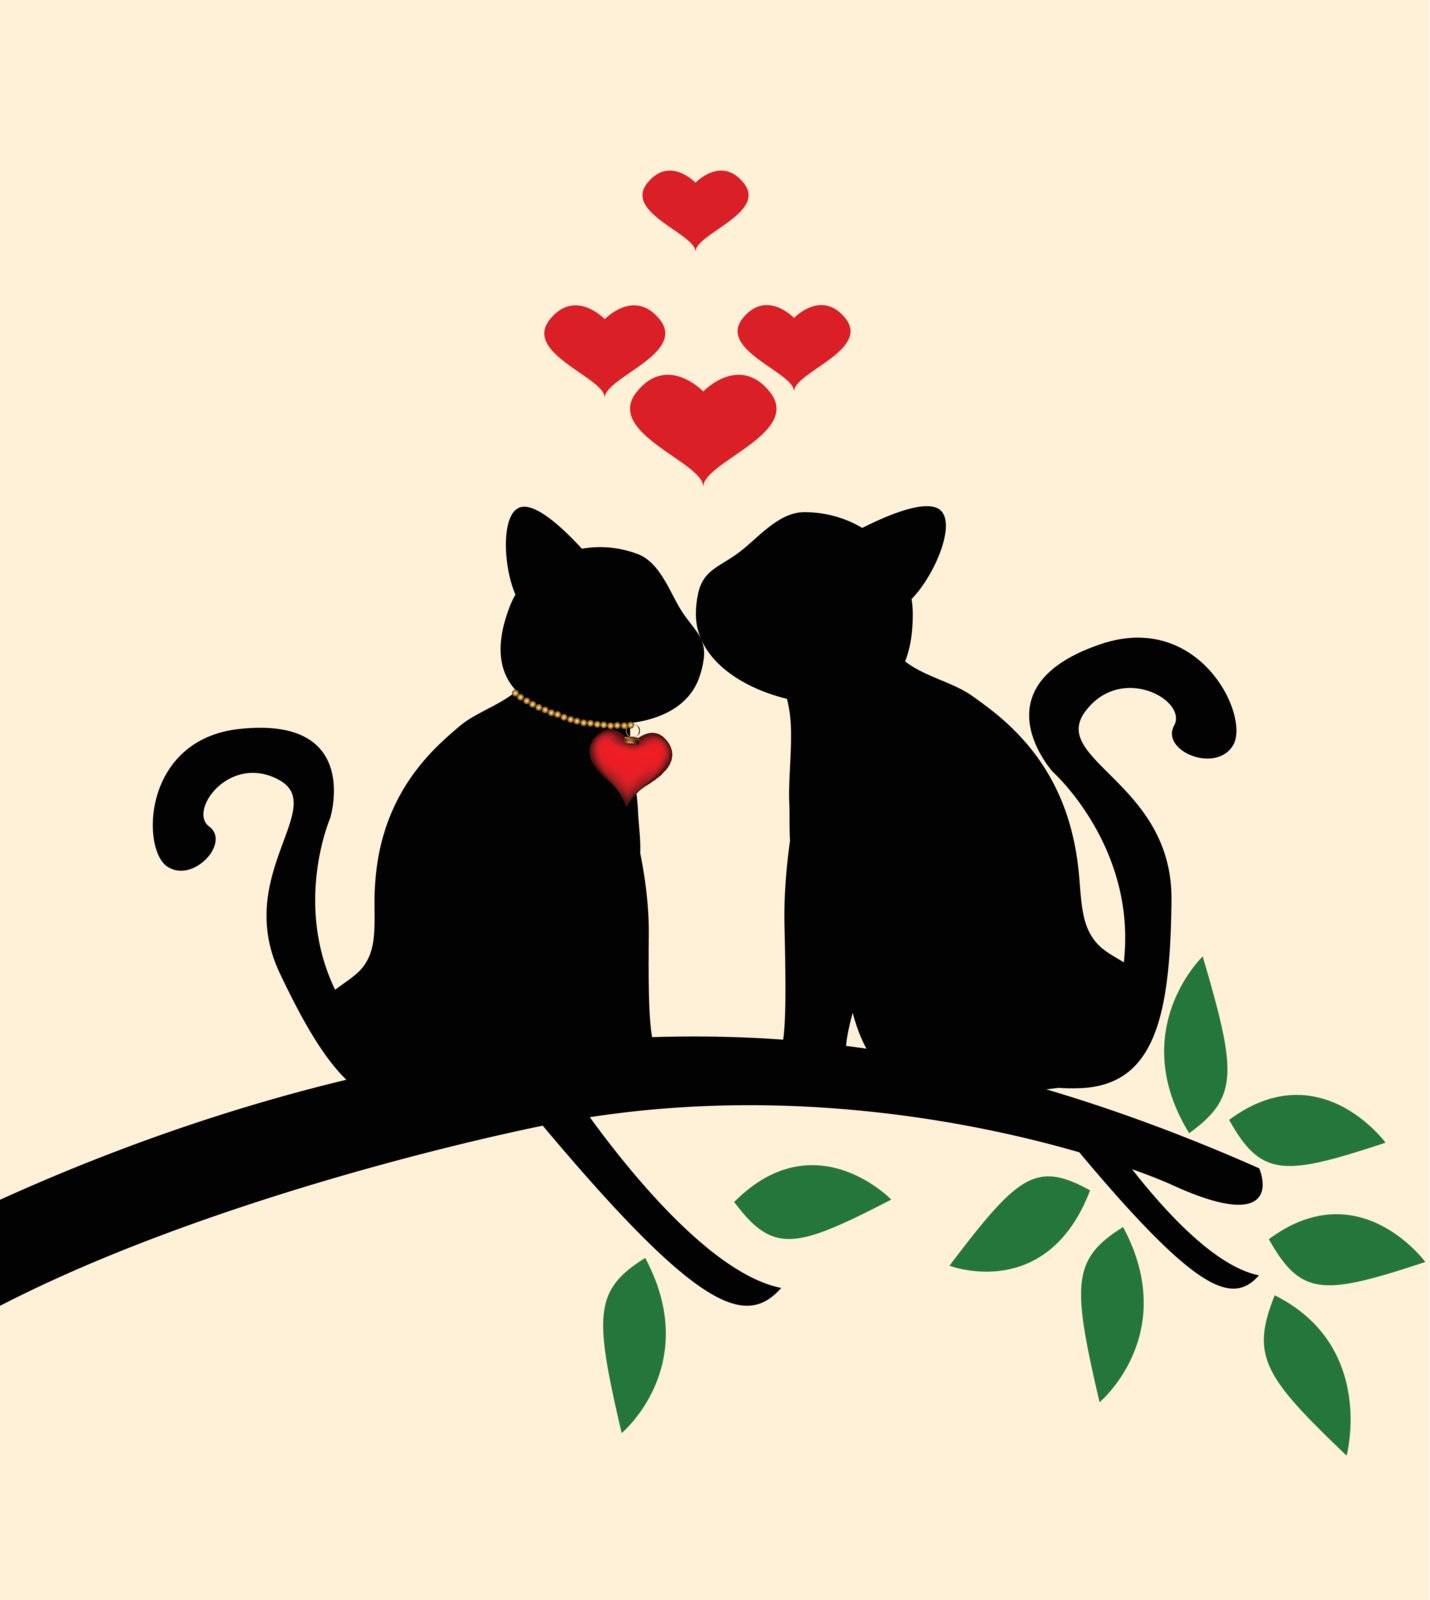 Cat love story by sujono